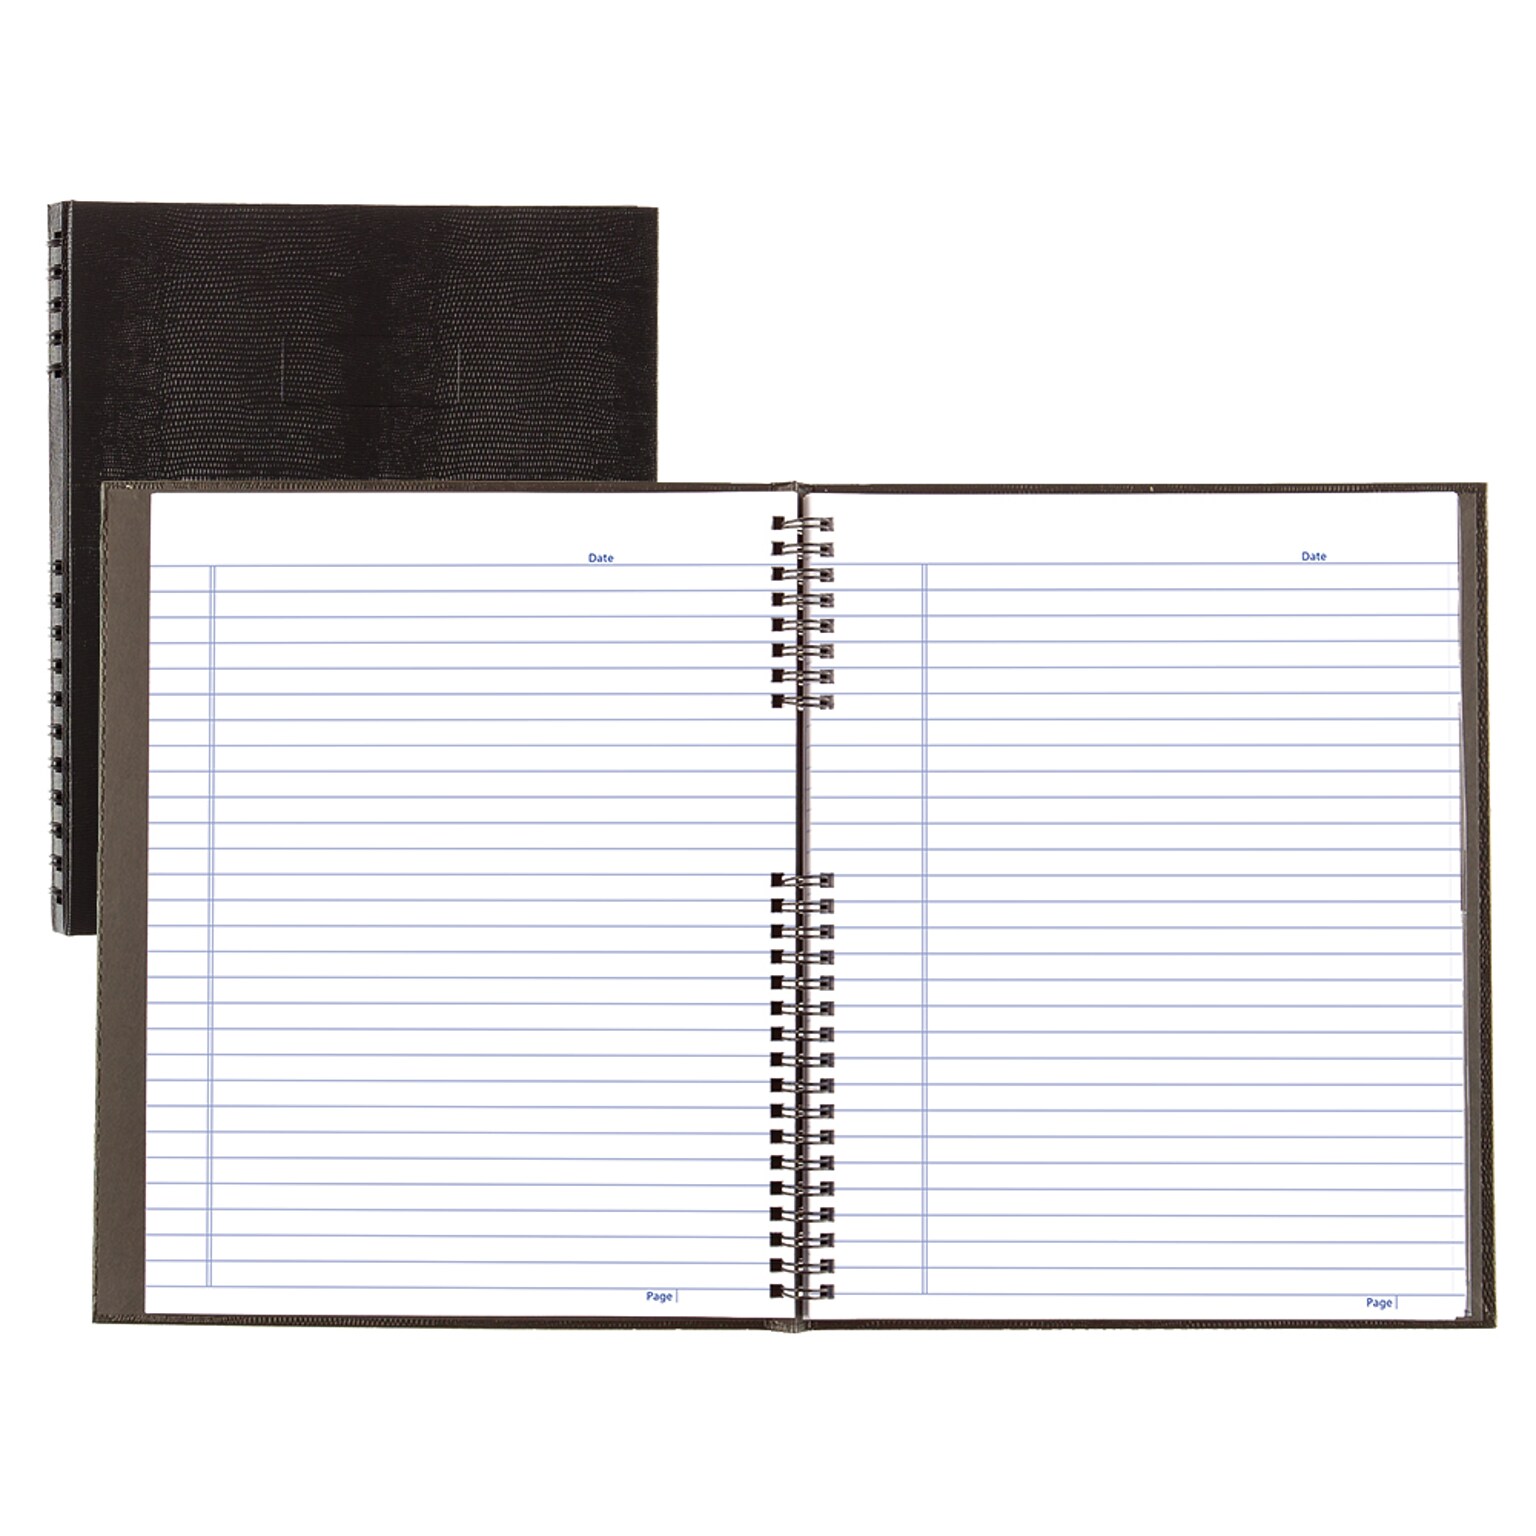 Blueline NotePro 1-Subject Professional Notebooks, 8 x 11, Wide Ruled, 75 Sheets, Black (REDA10150BLK)